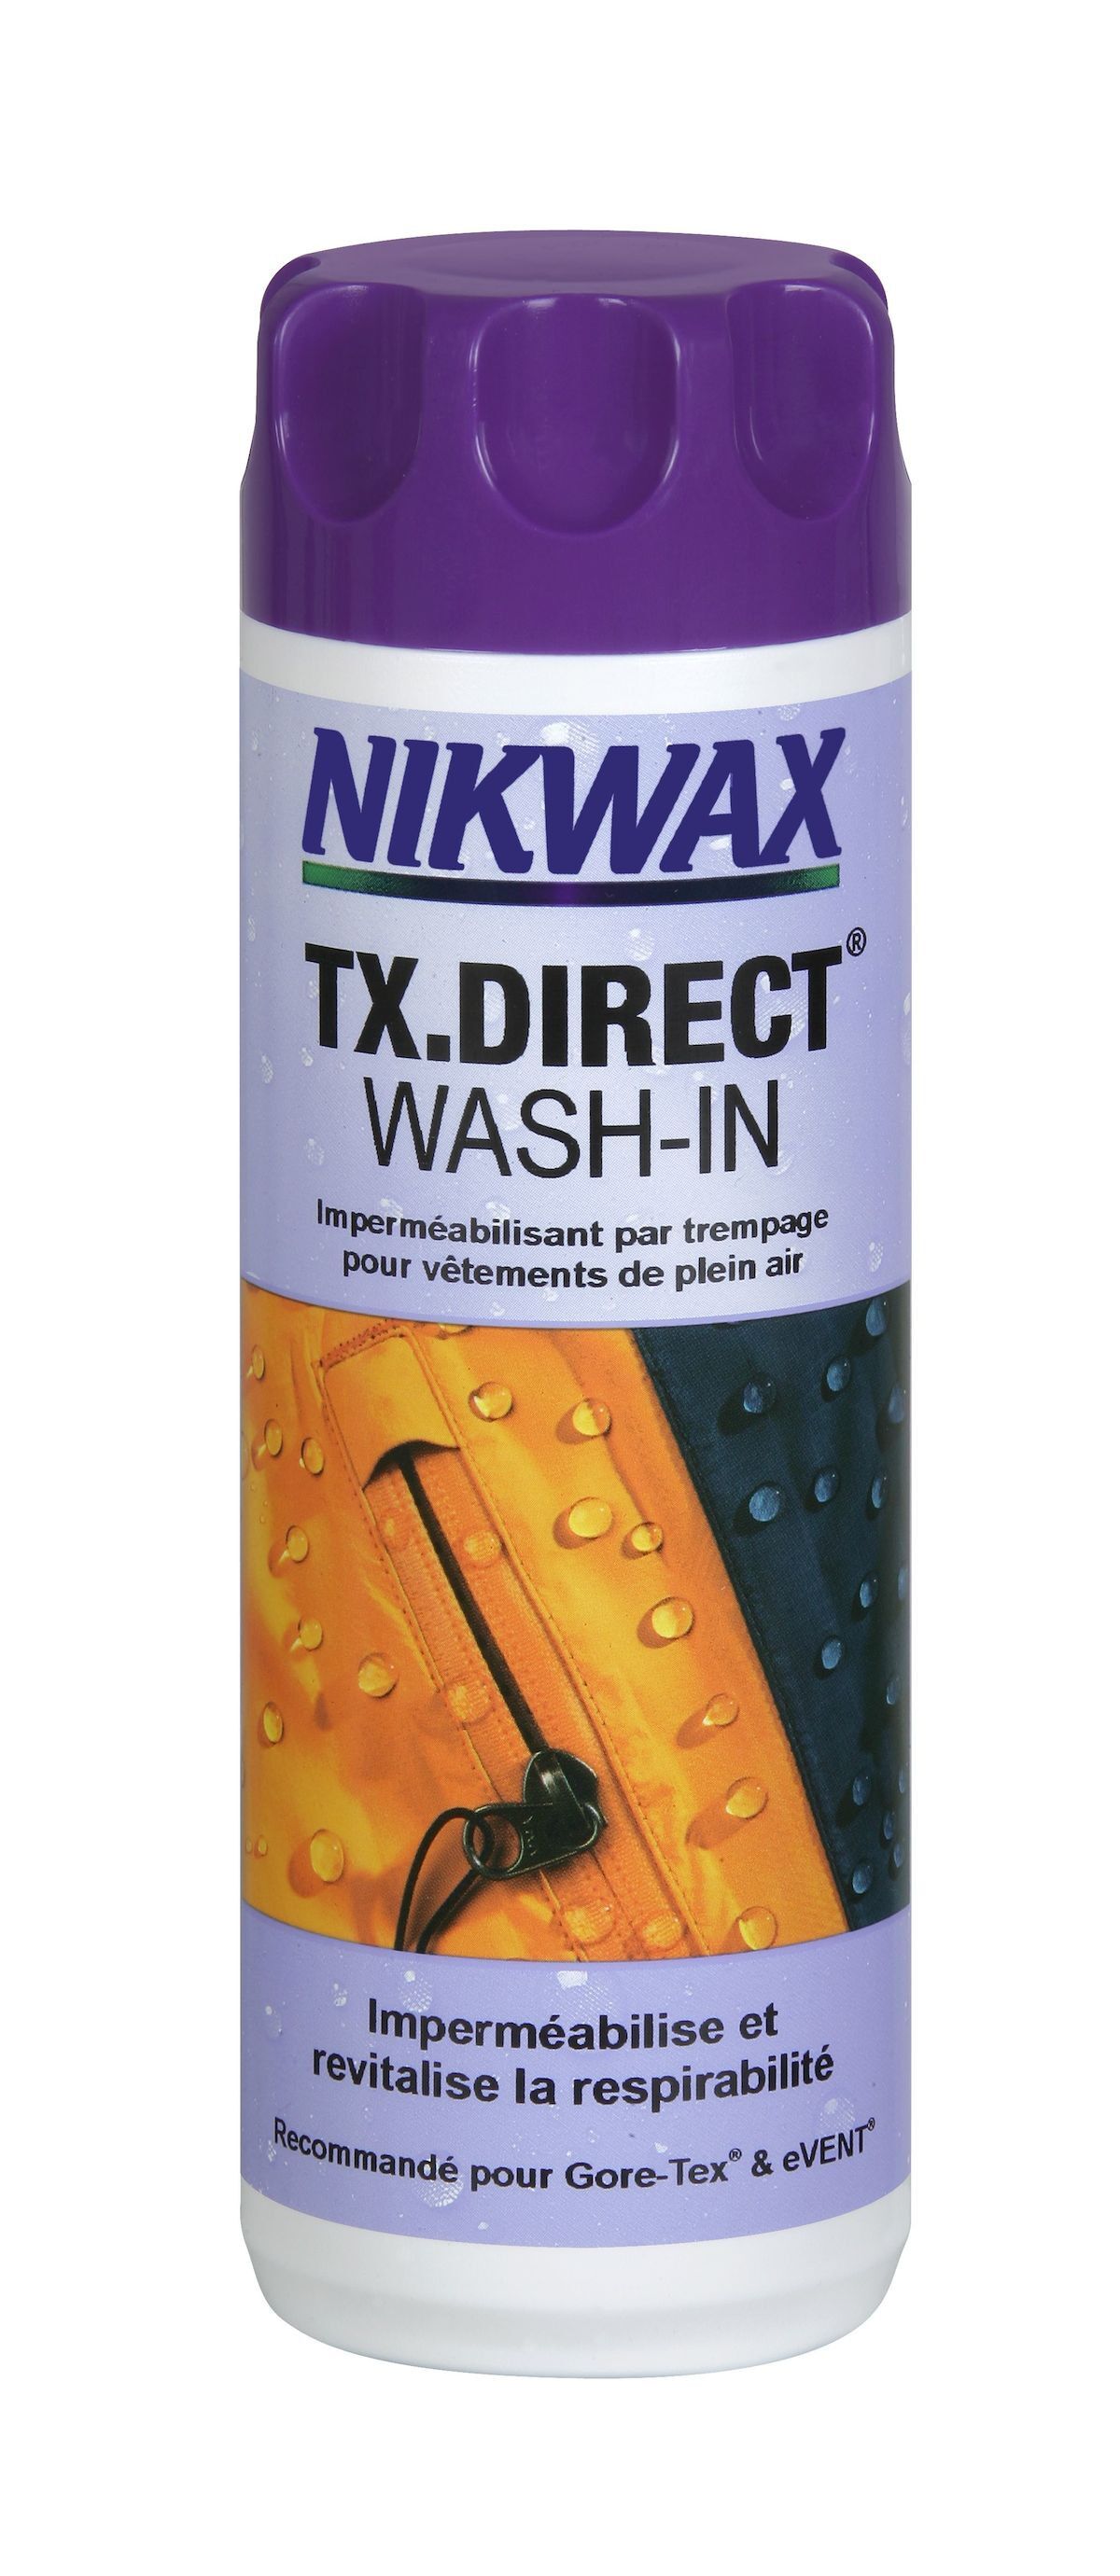 Nikwax - TX. Direct - Dry treatment